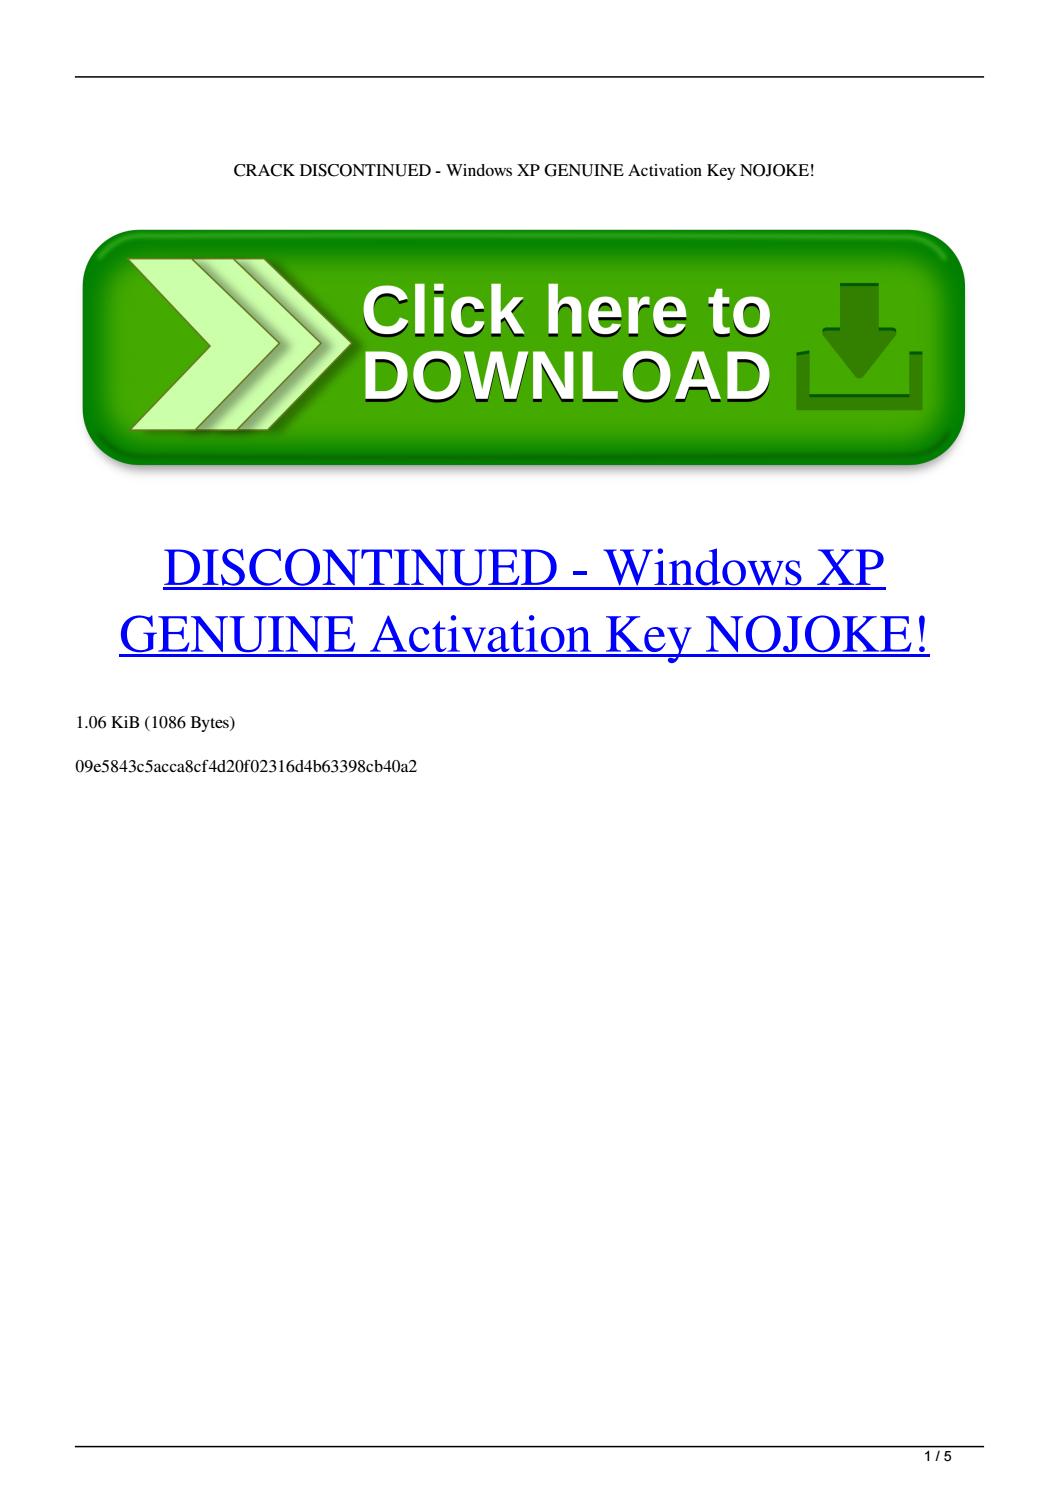 Windows xp genuine activator download